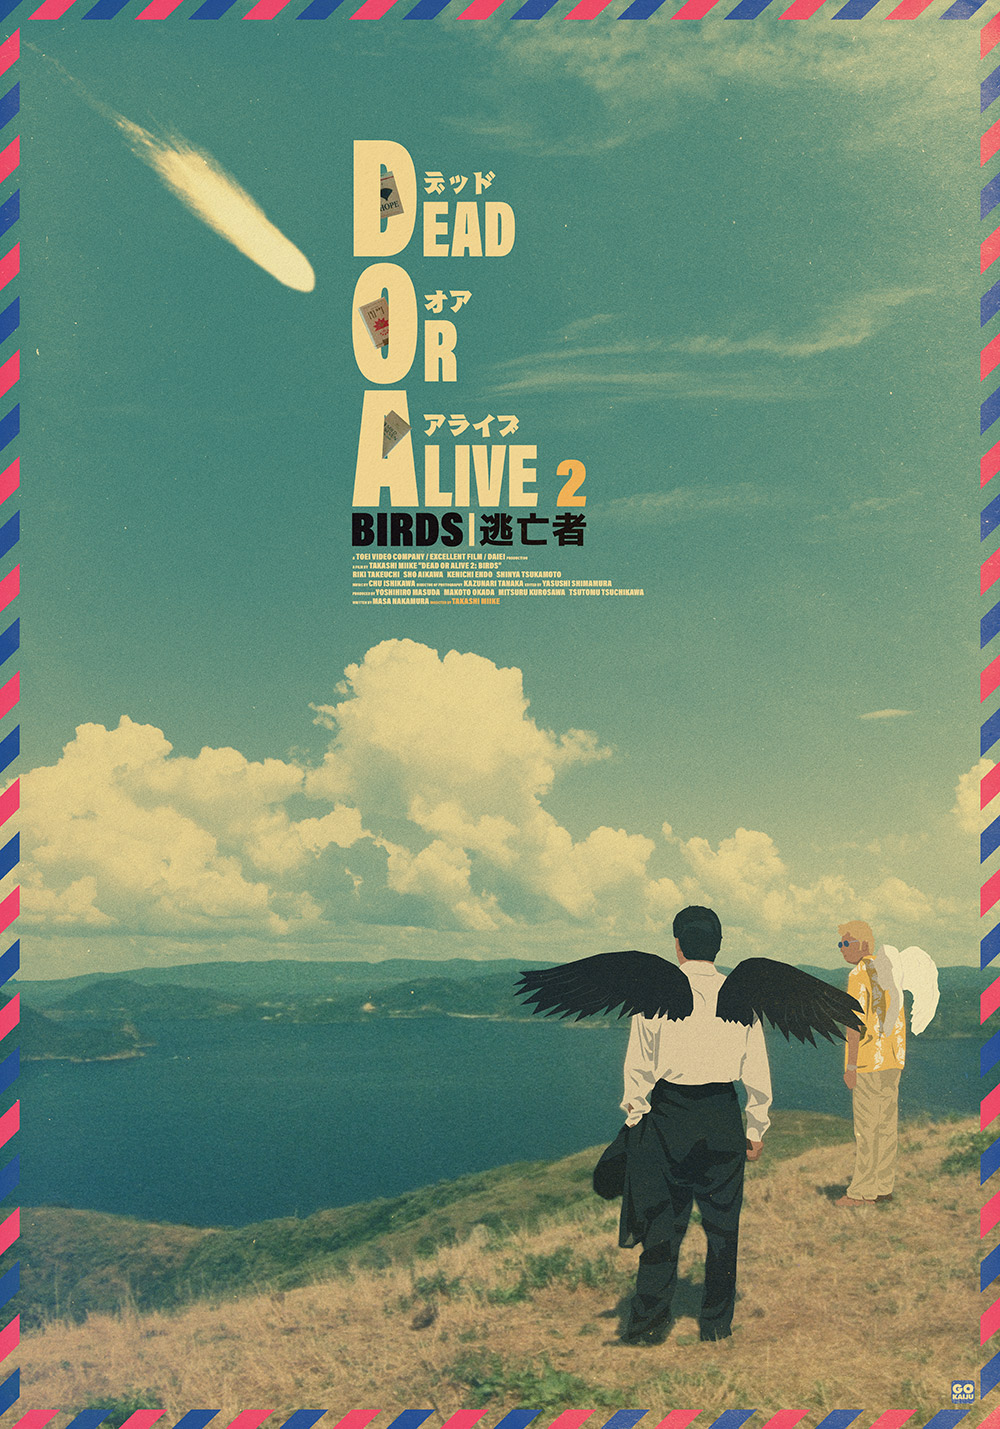 Dead or alive 2: Birds